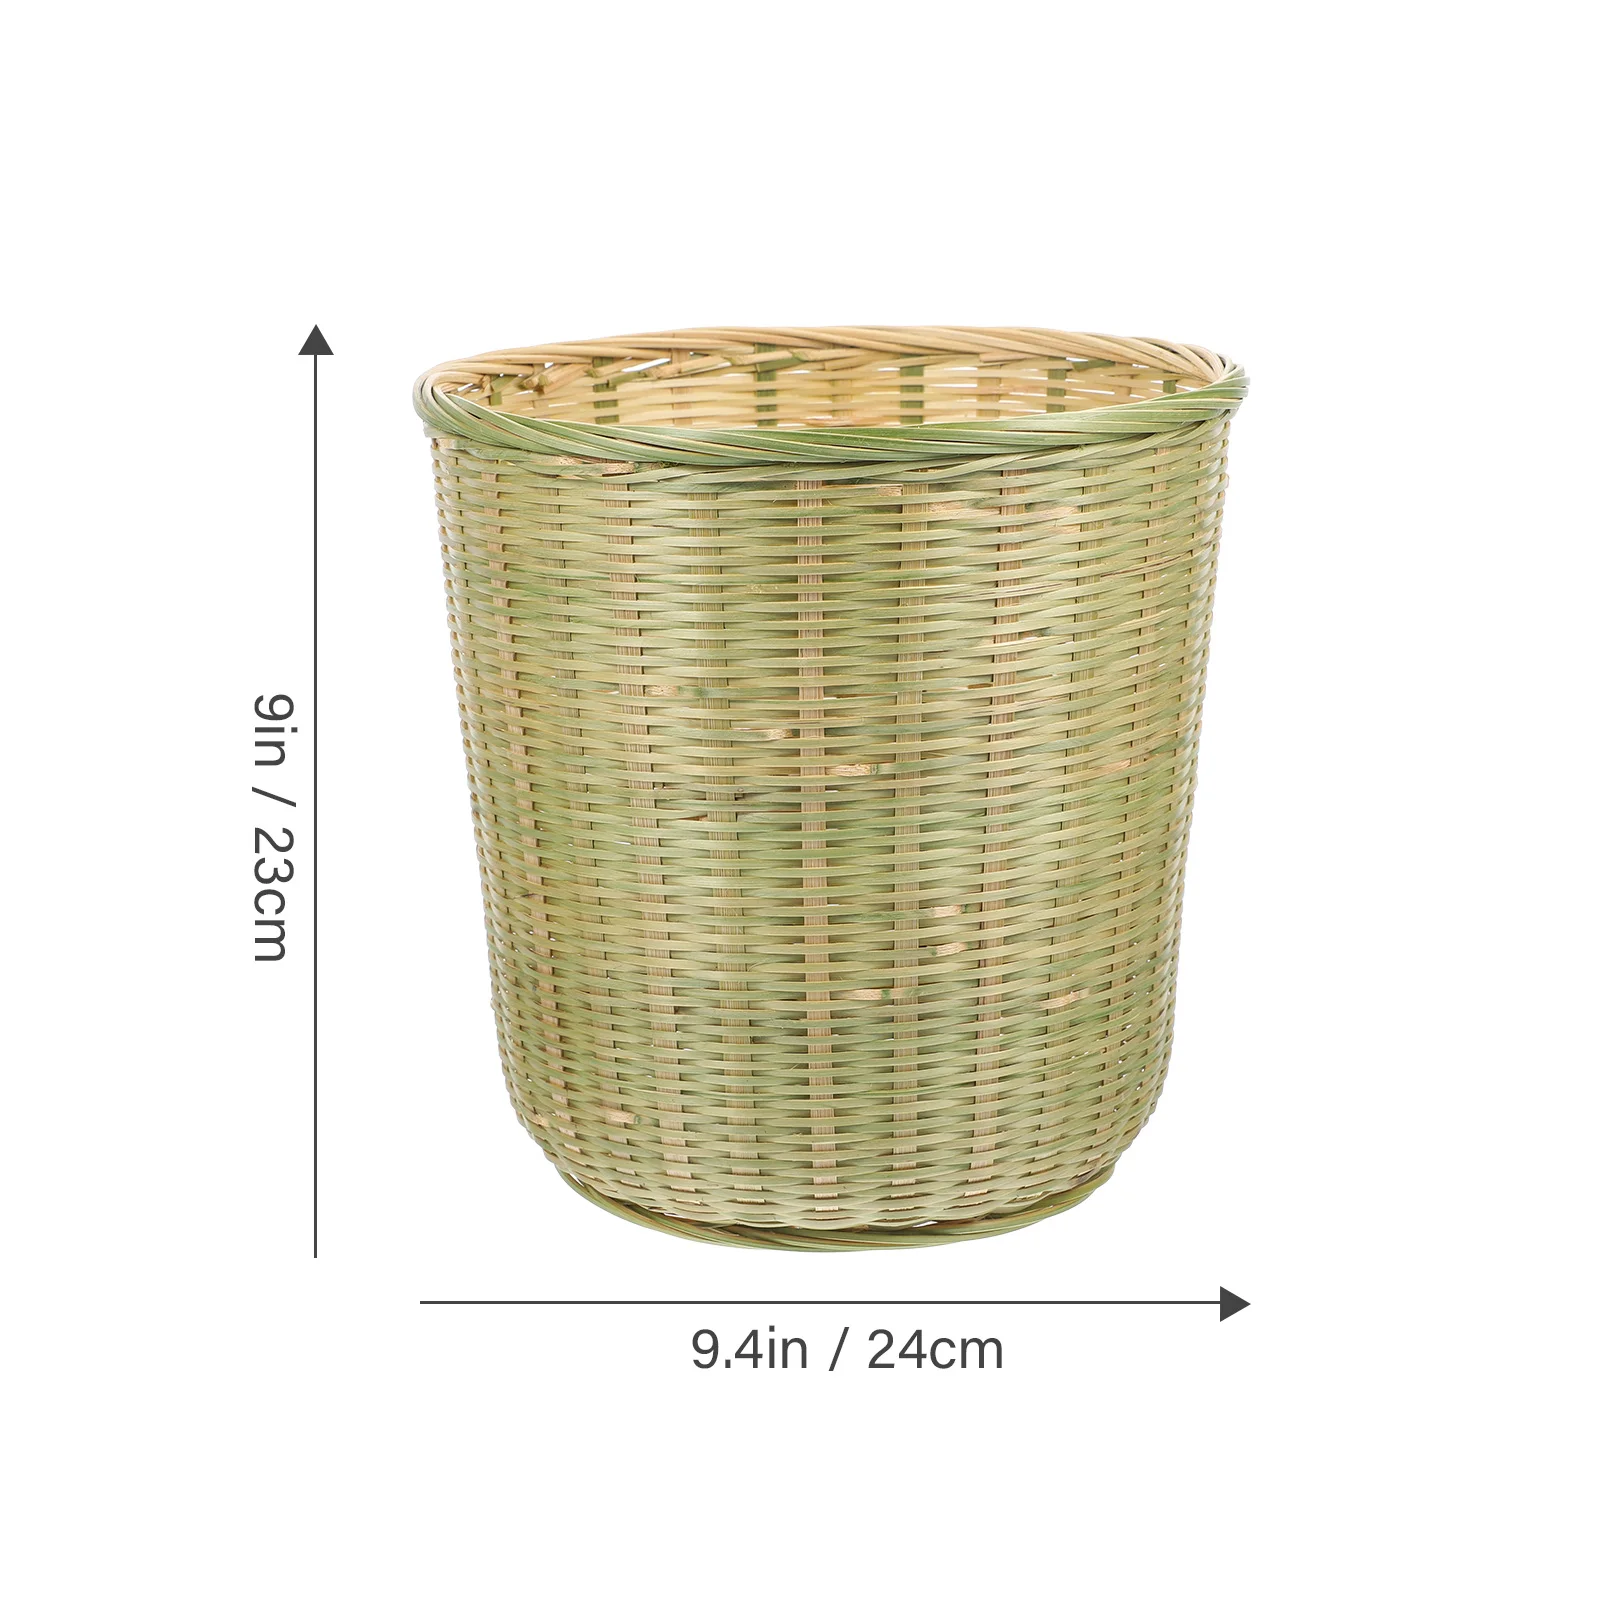 

Basket Storage Baskets Woven Waste Seagrass Wicker Rattan Trash Can Organizer Toy Sundries Round Bin Laundry Planter Bamboo Bins